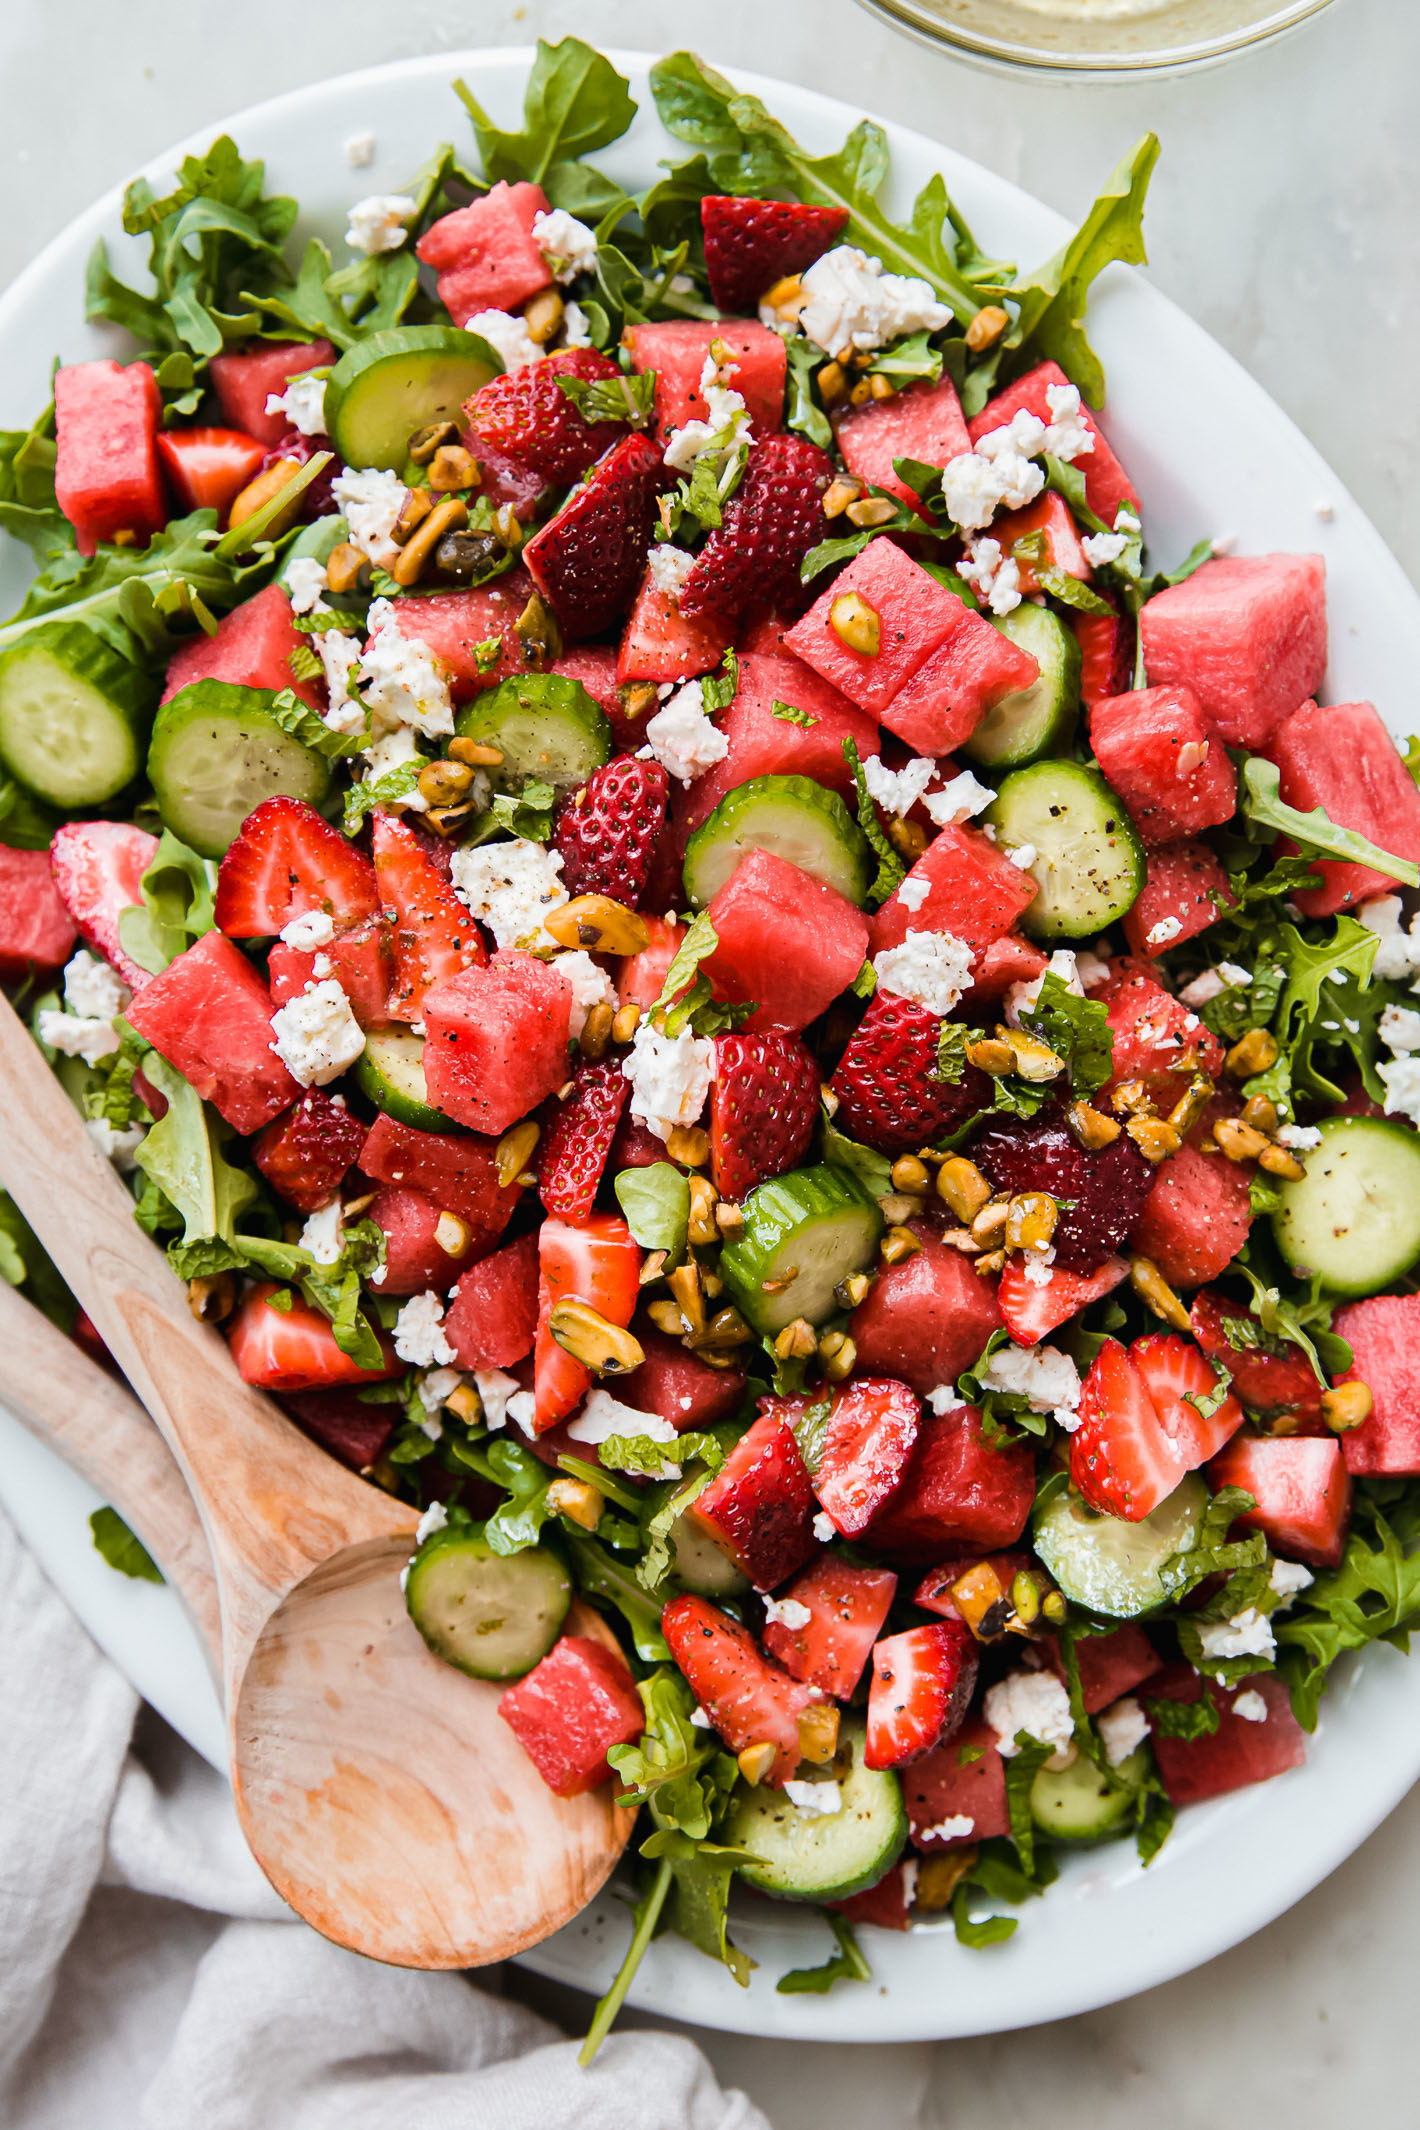 Arugula salad with feta, watermelon and strawberry